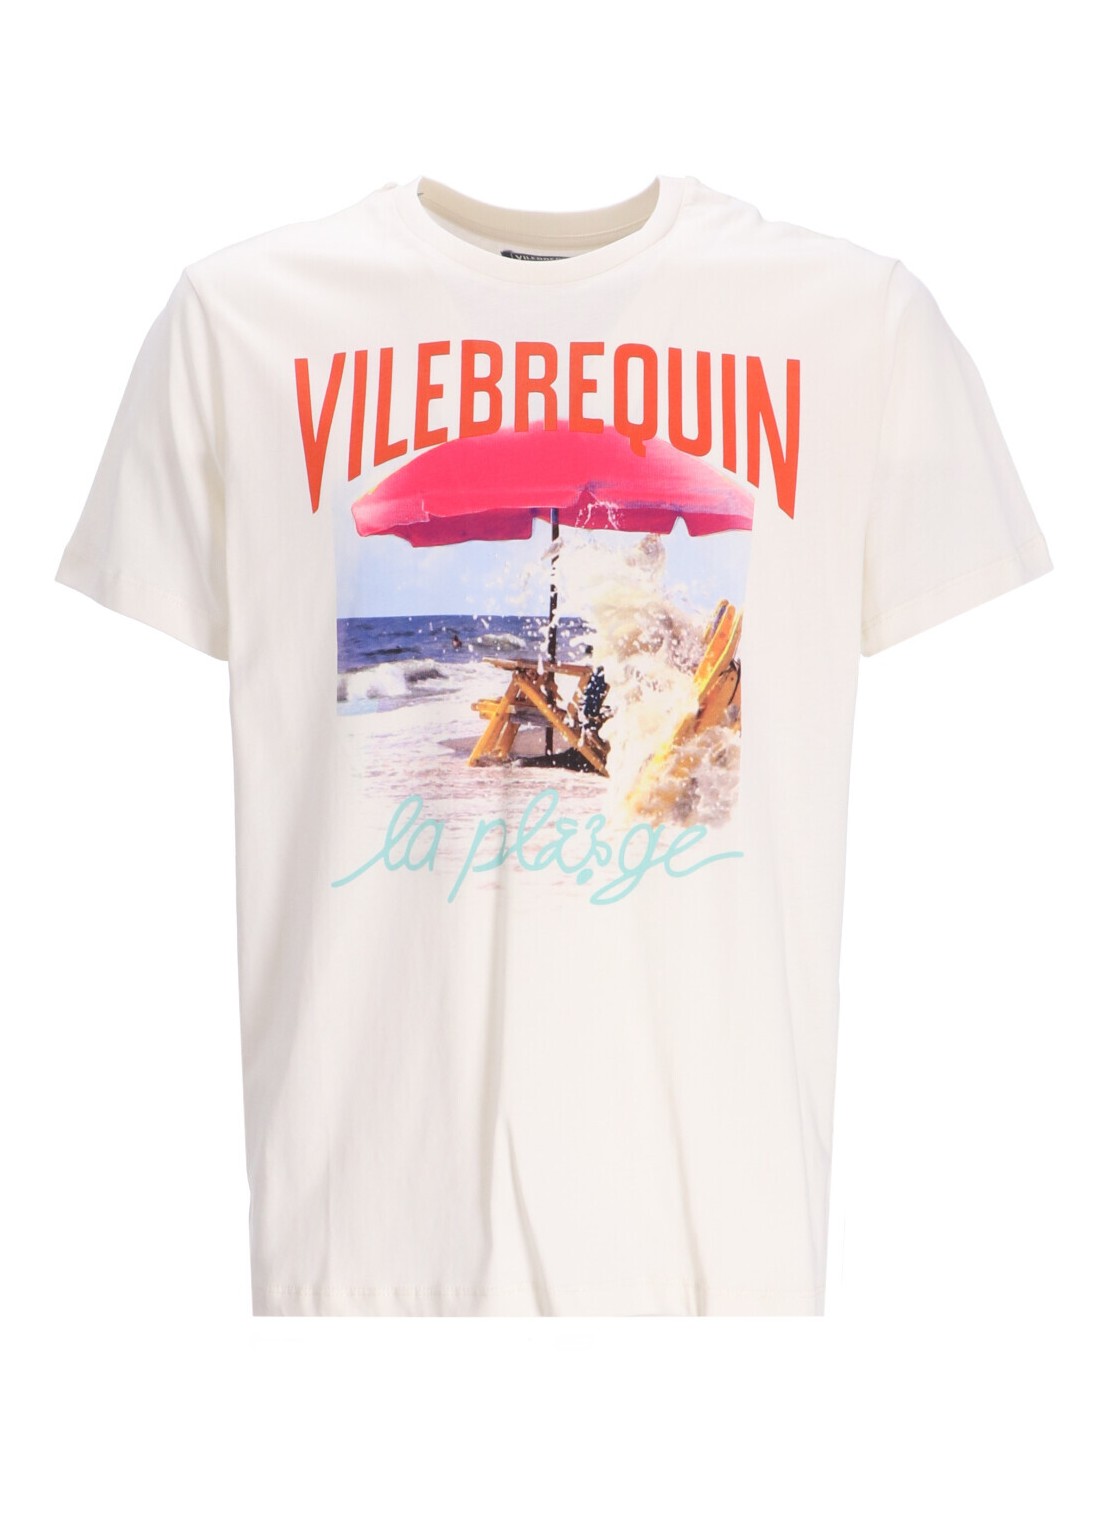 Camiseta vilebrequin t-shirt manportisol ap386 - ptsap386 003 talla XL
 